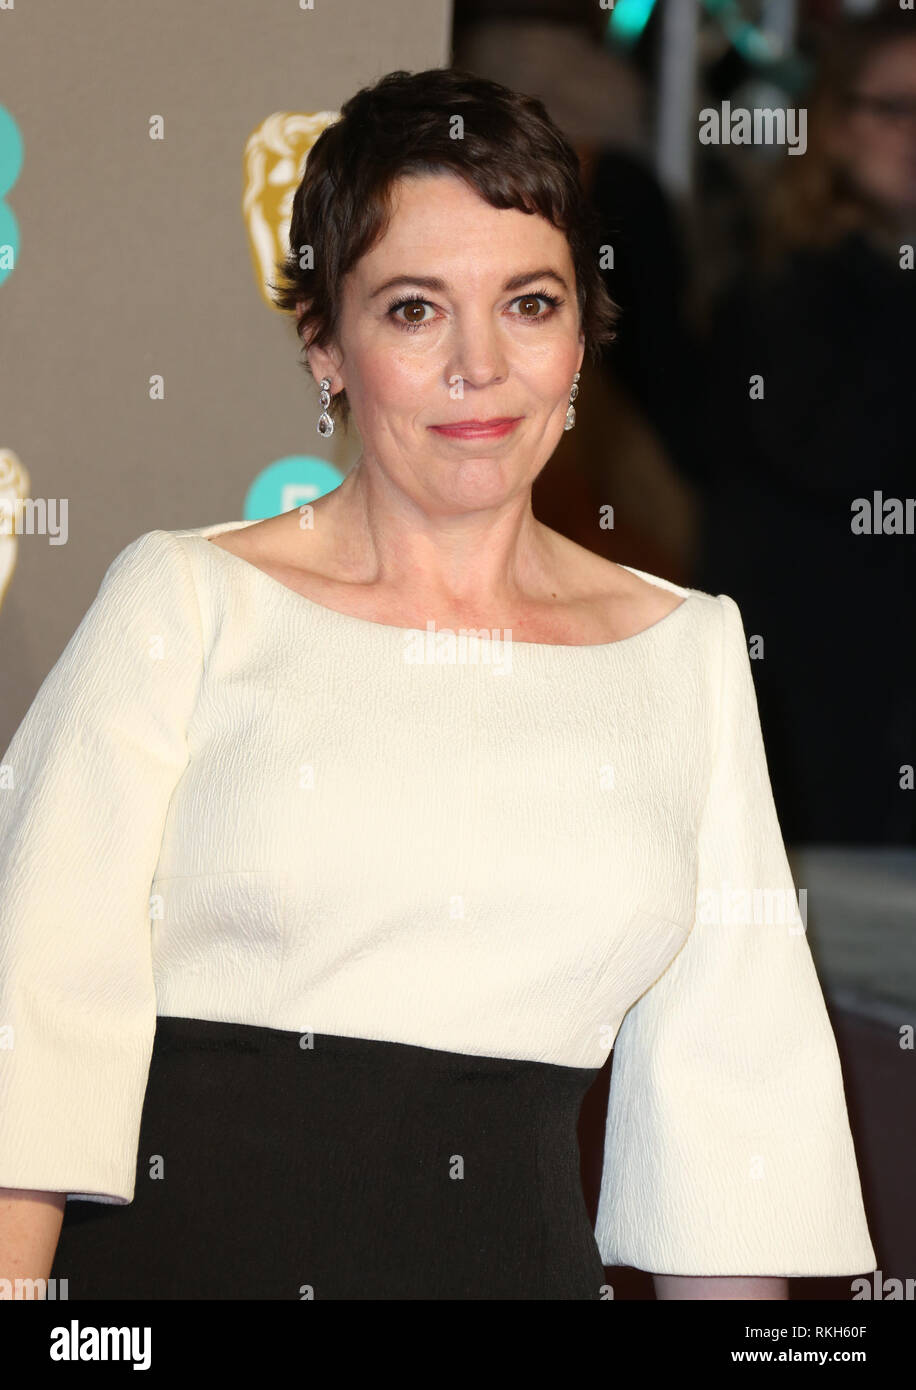 Londra, UK, 10 febbraio, 2019. Olivia Colman assiste la 72a British Academy Film Awards presso la Royal Albert Hall Foto Stock